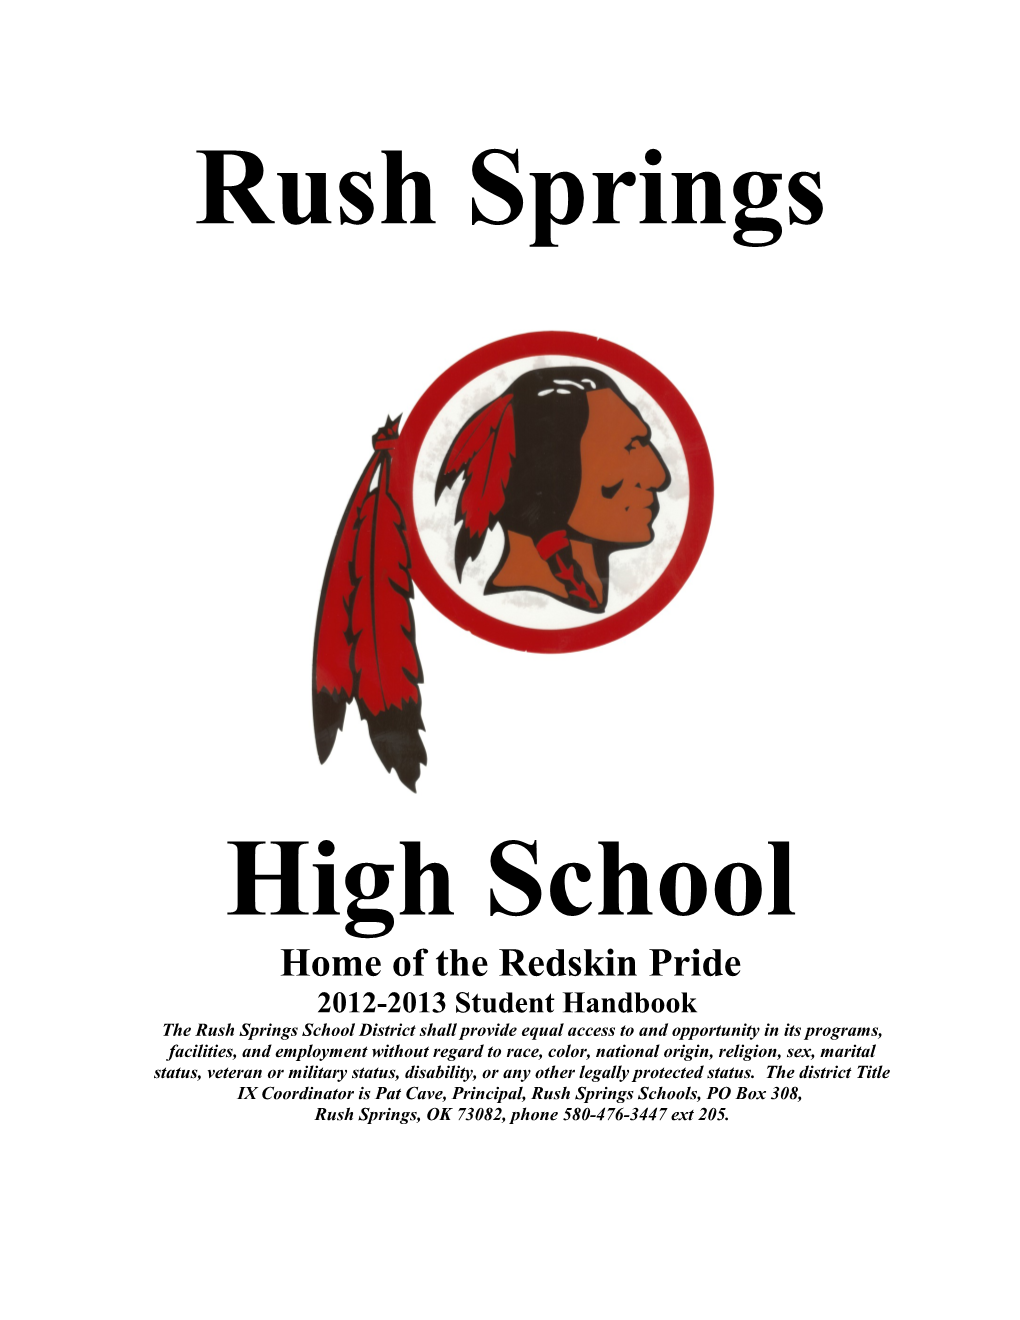 Rush Springs High School Students